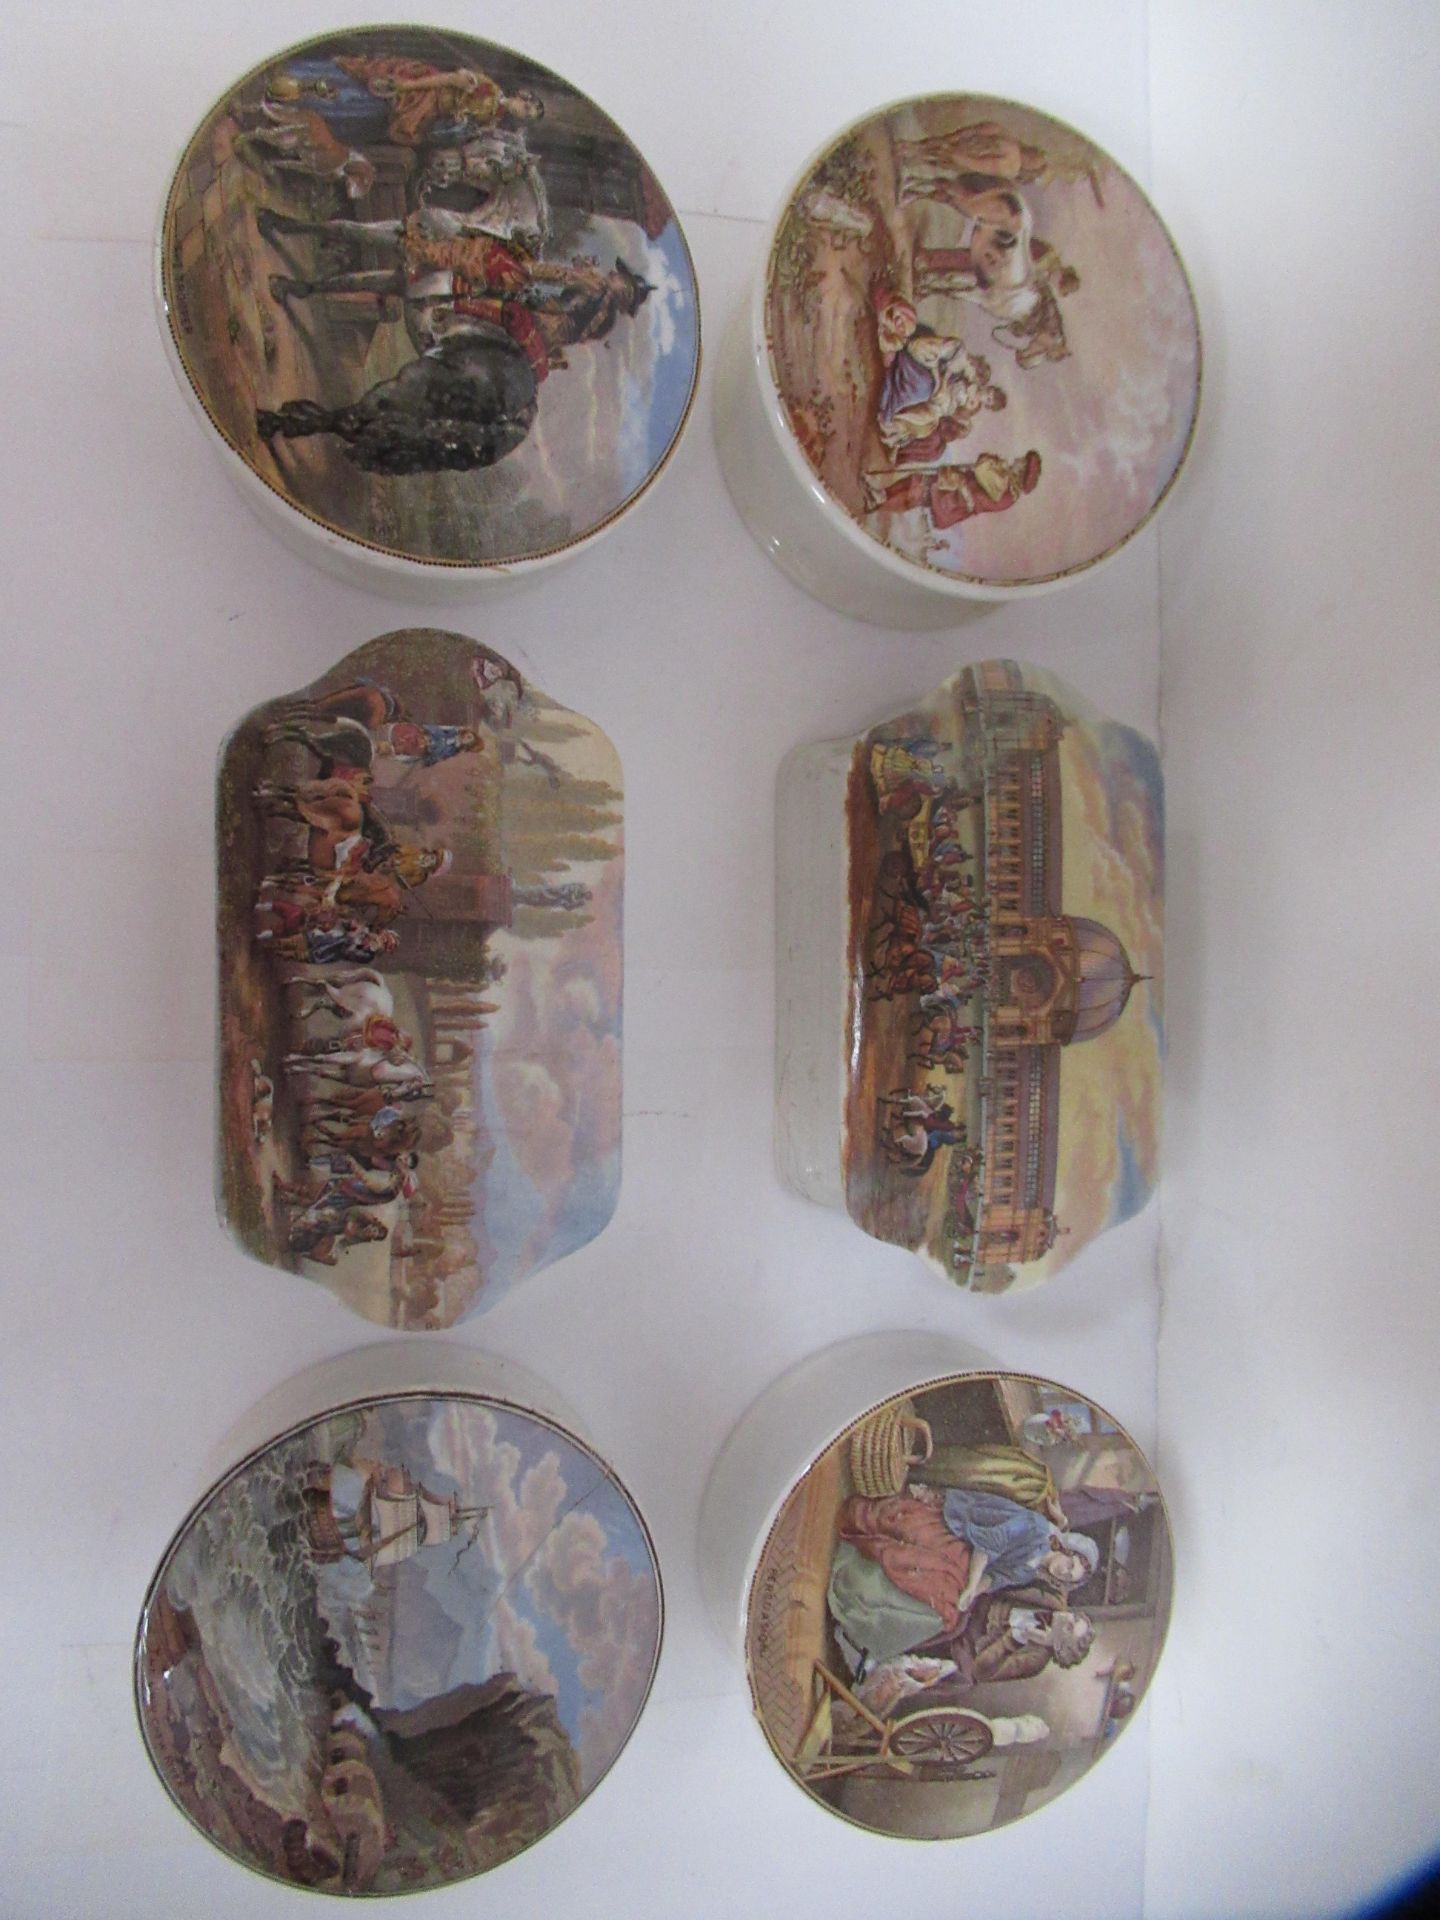 6x Prattware ceramic lids including 'Persuasion', 'The Chin-Chew River', 'Wouvermann Pinx', 'P. Wouv